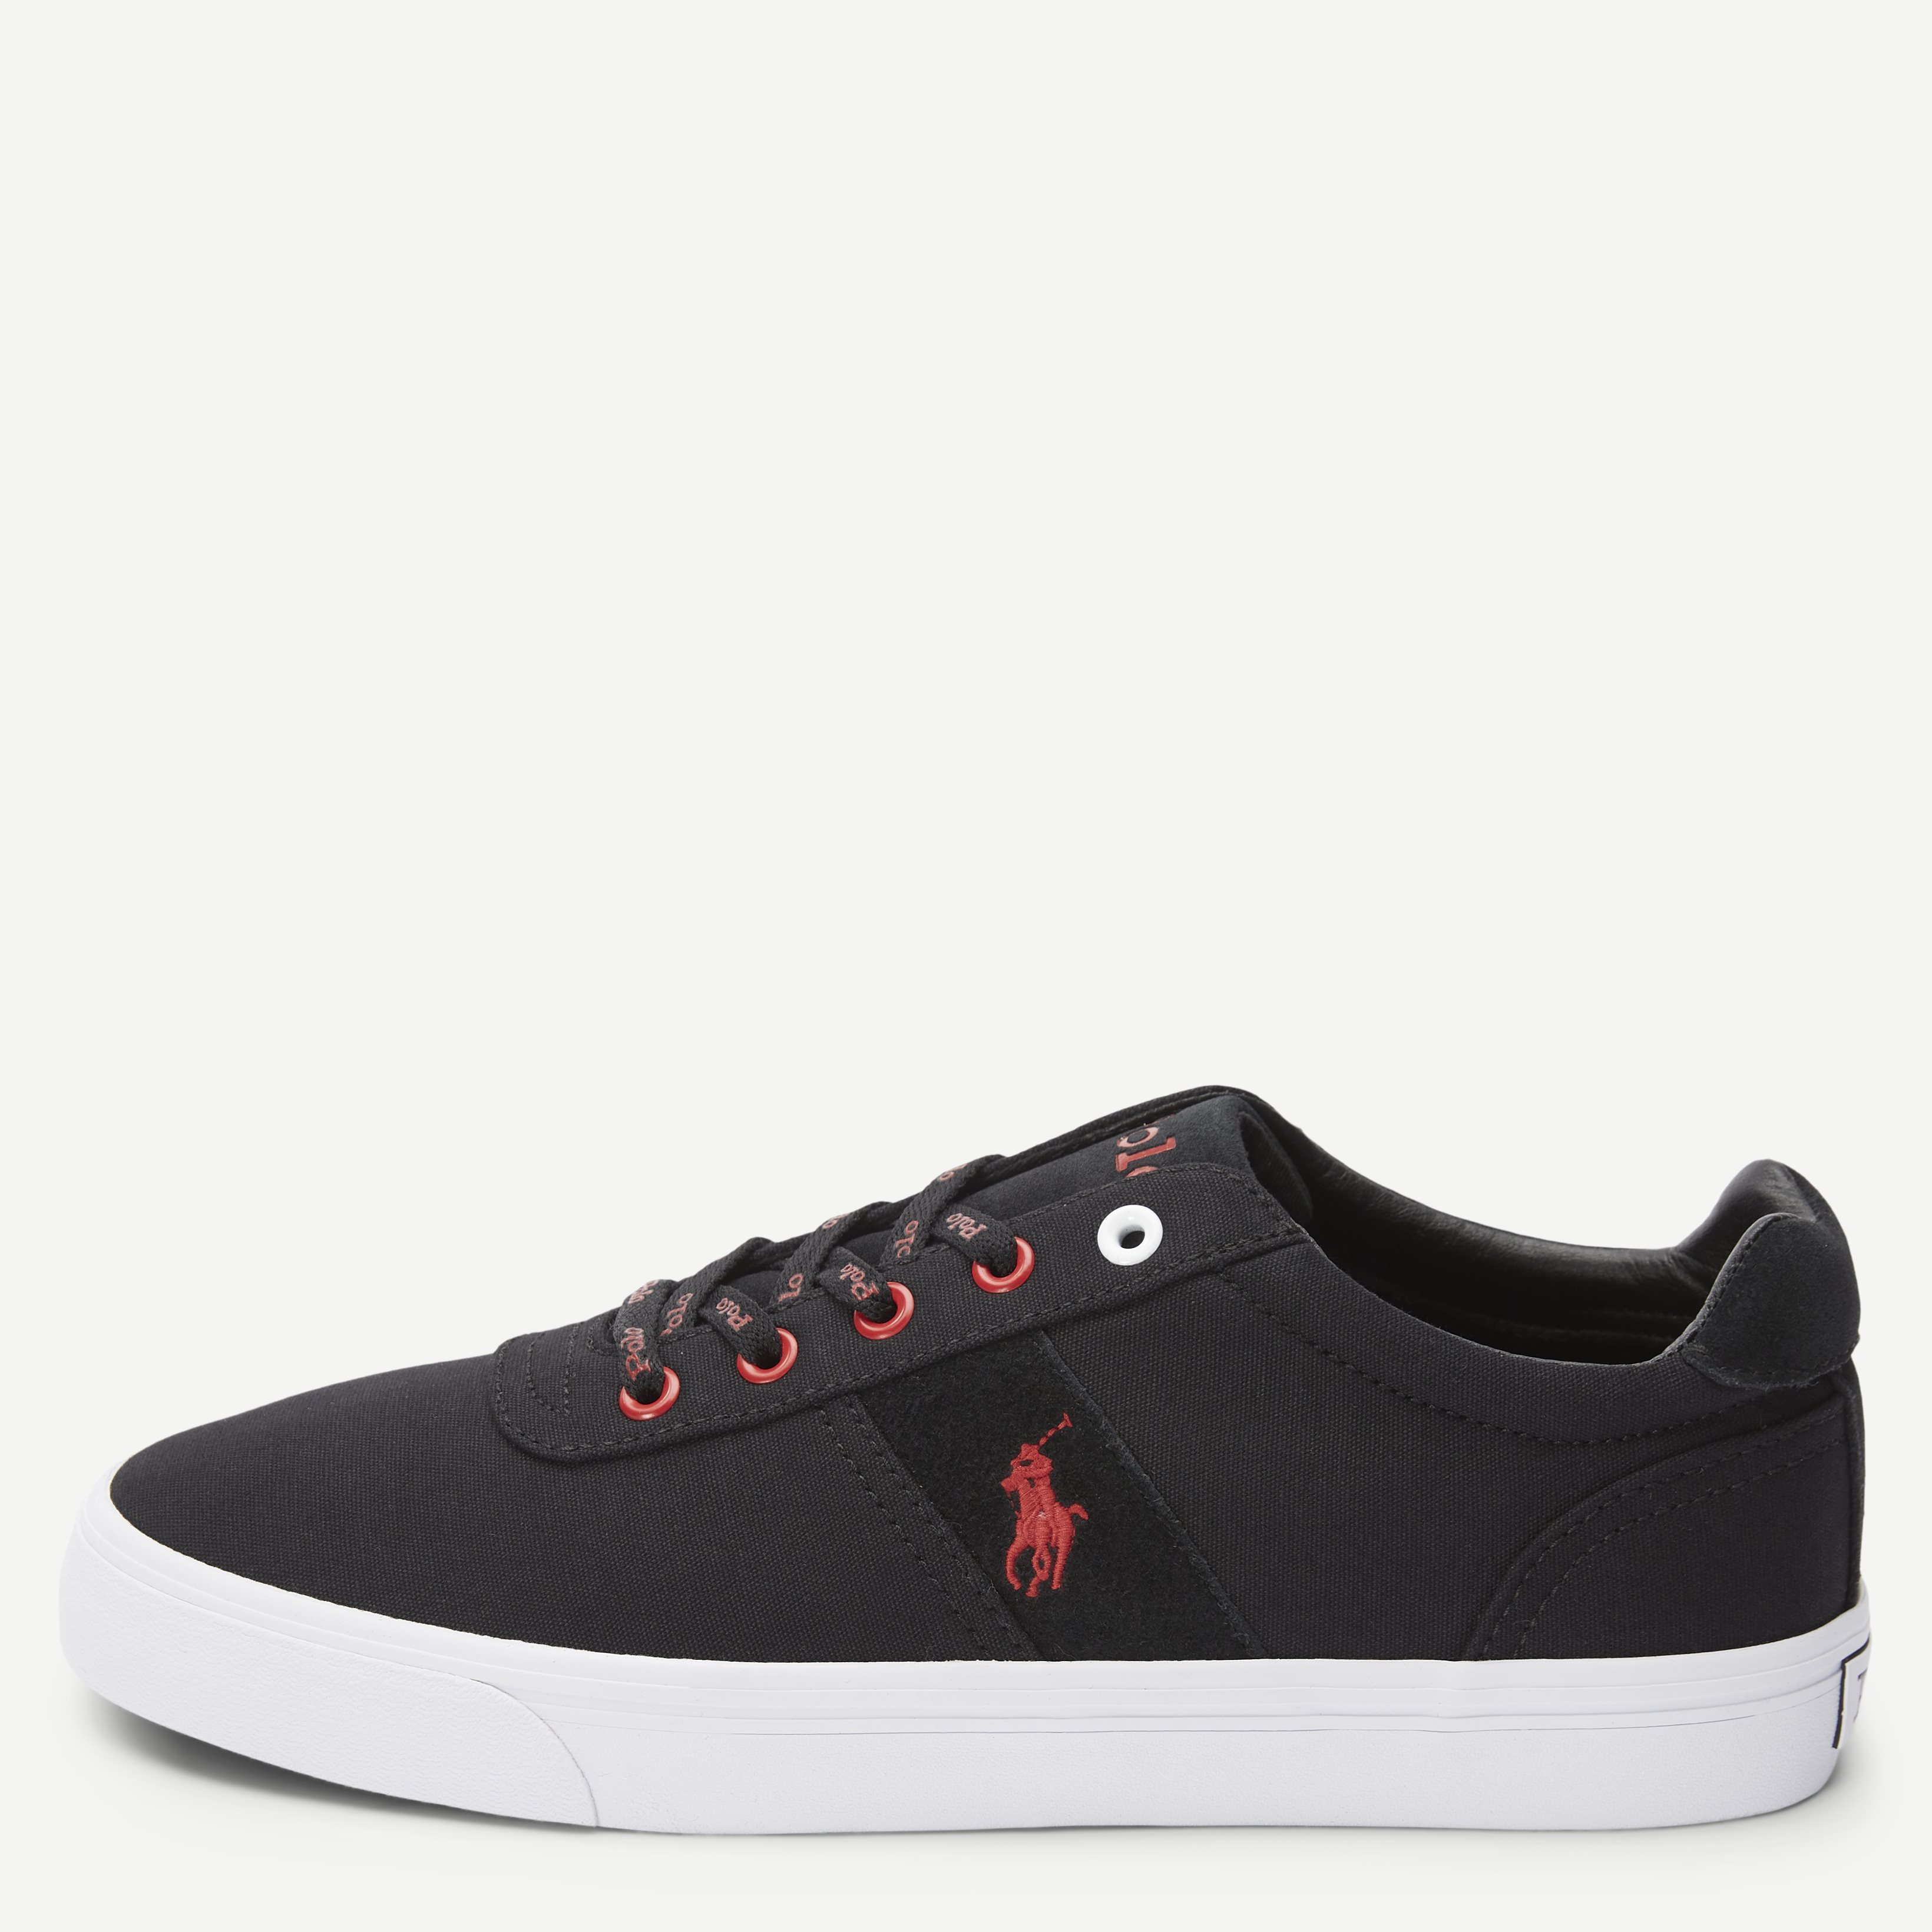 Hanford Sneakers - Shoes - Black